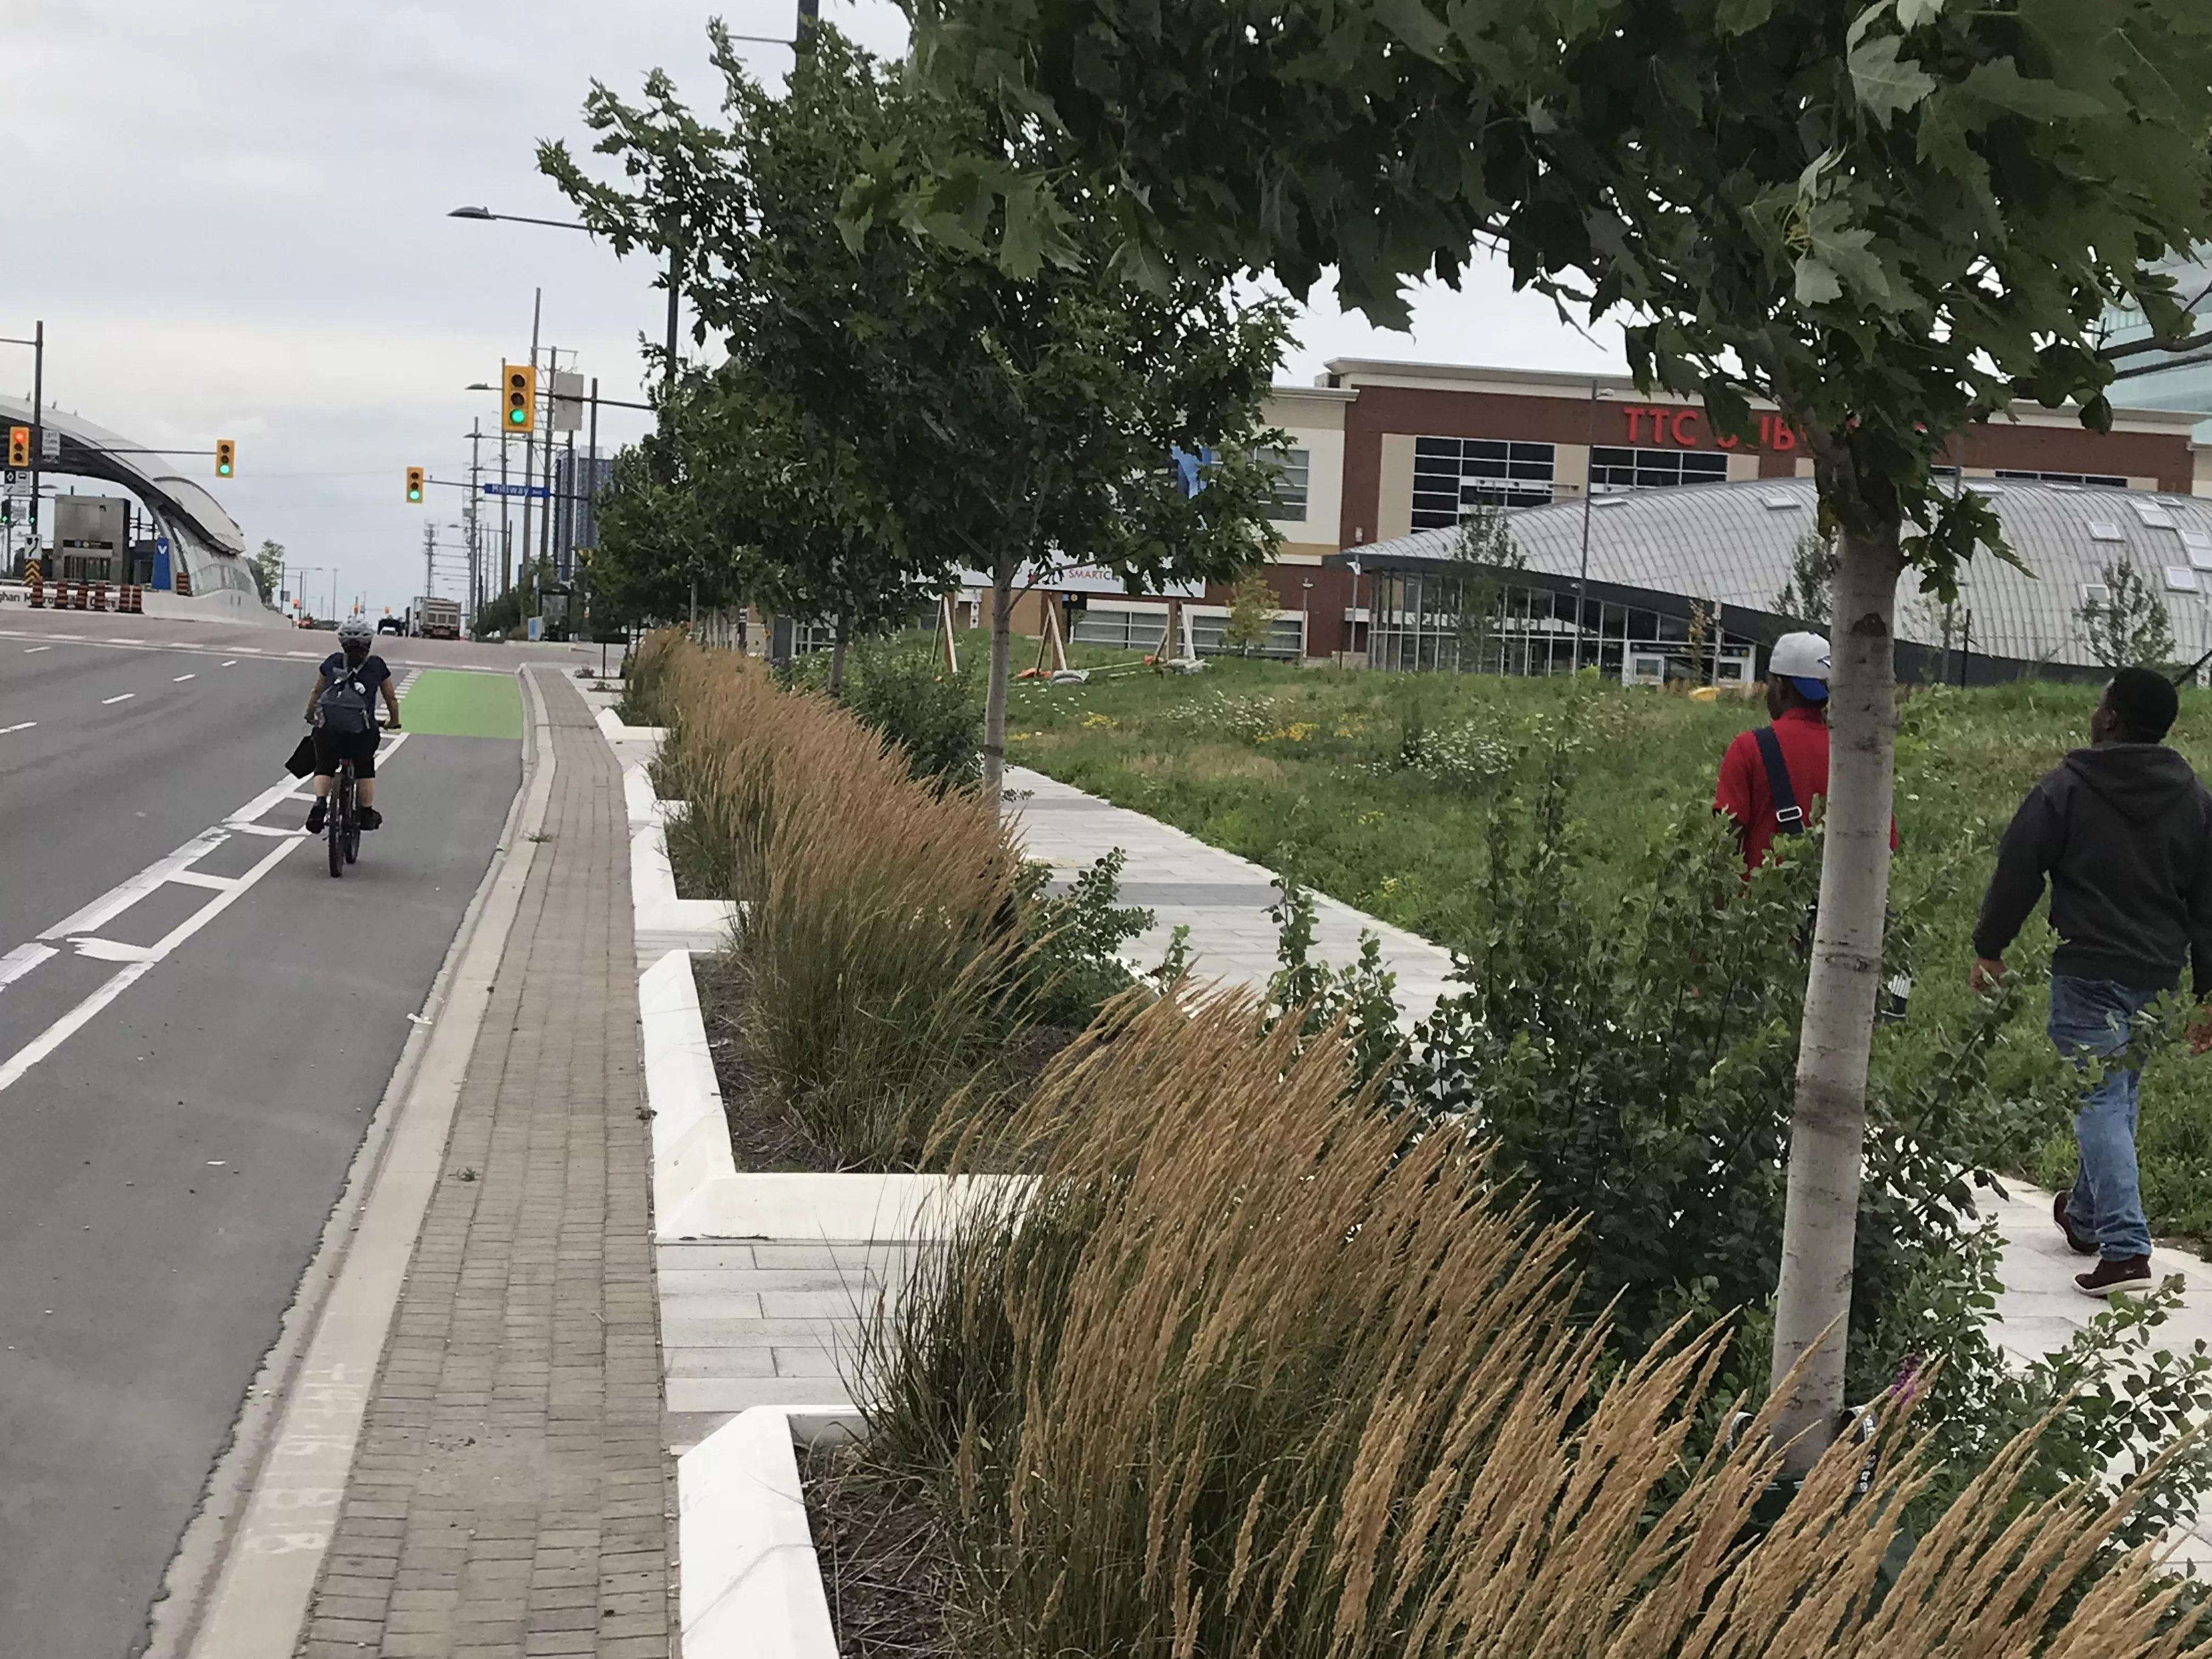 Cyclist riding bike in designated bike lane